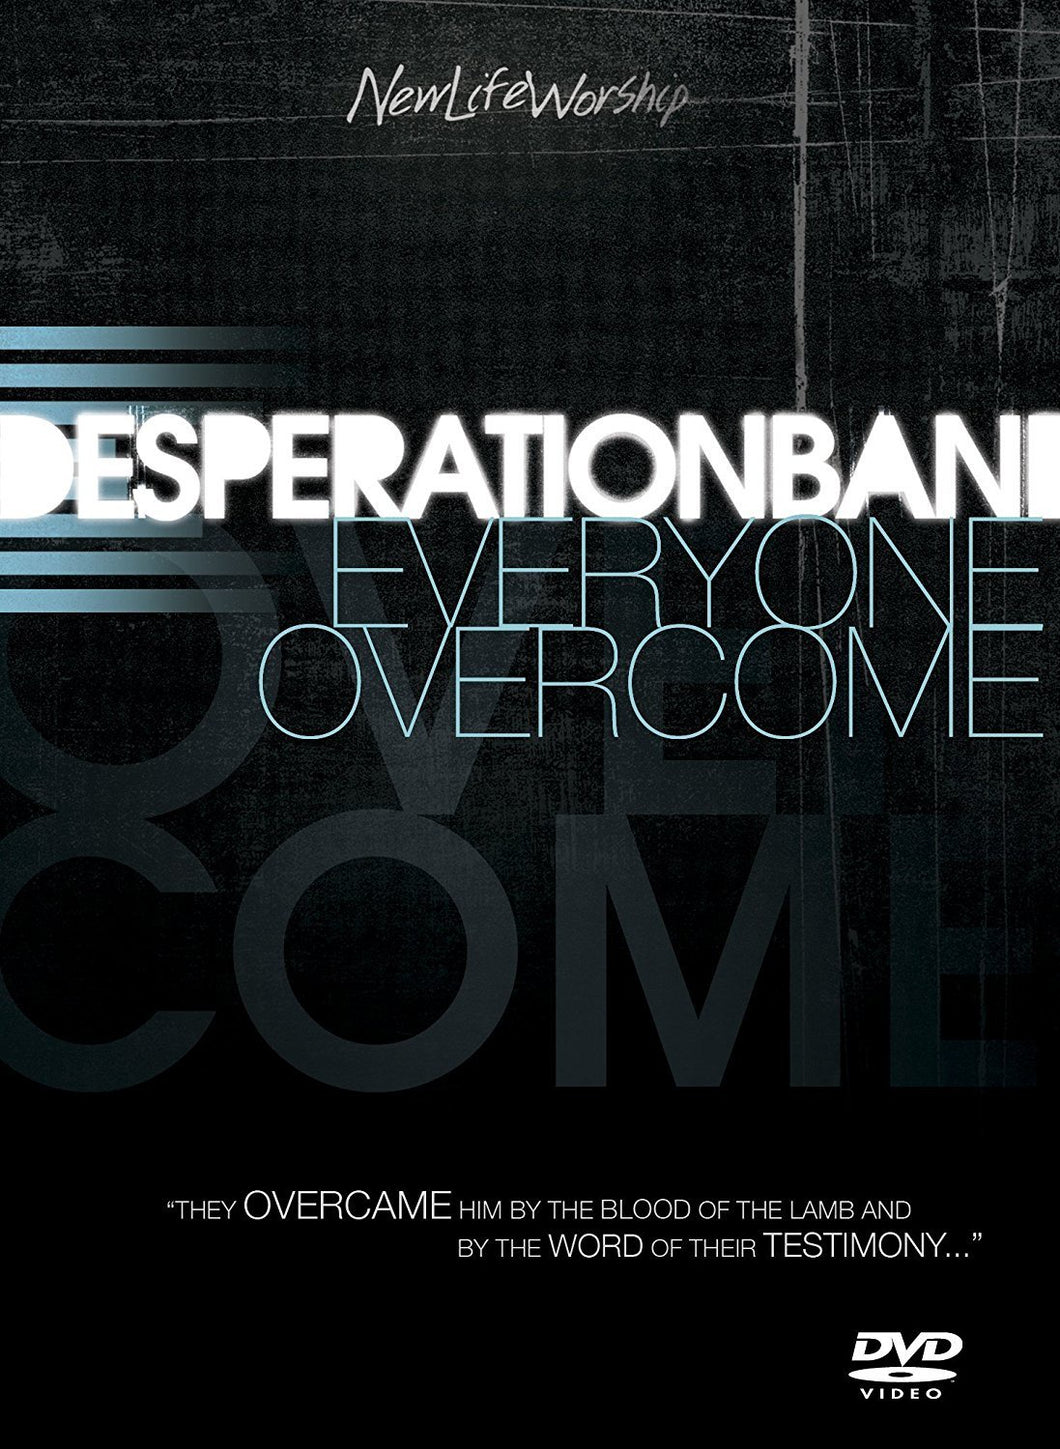 Desperation Band Everyone Overcome DVD